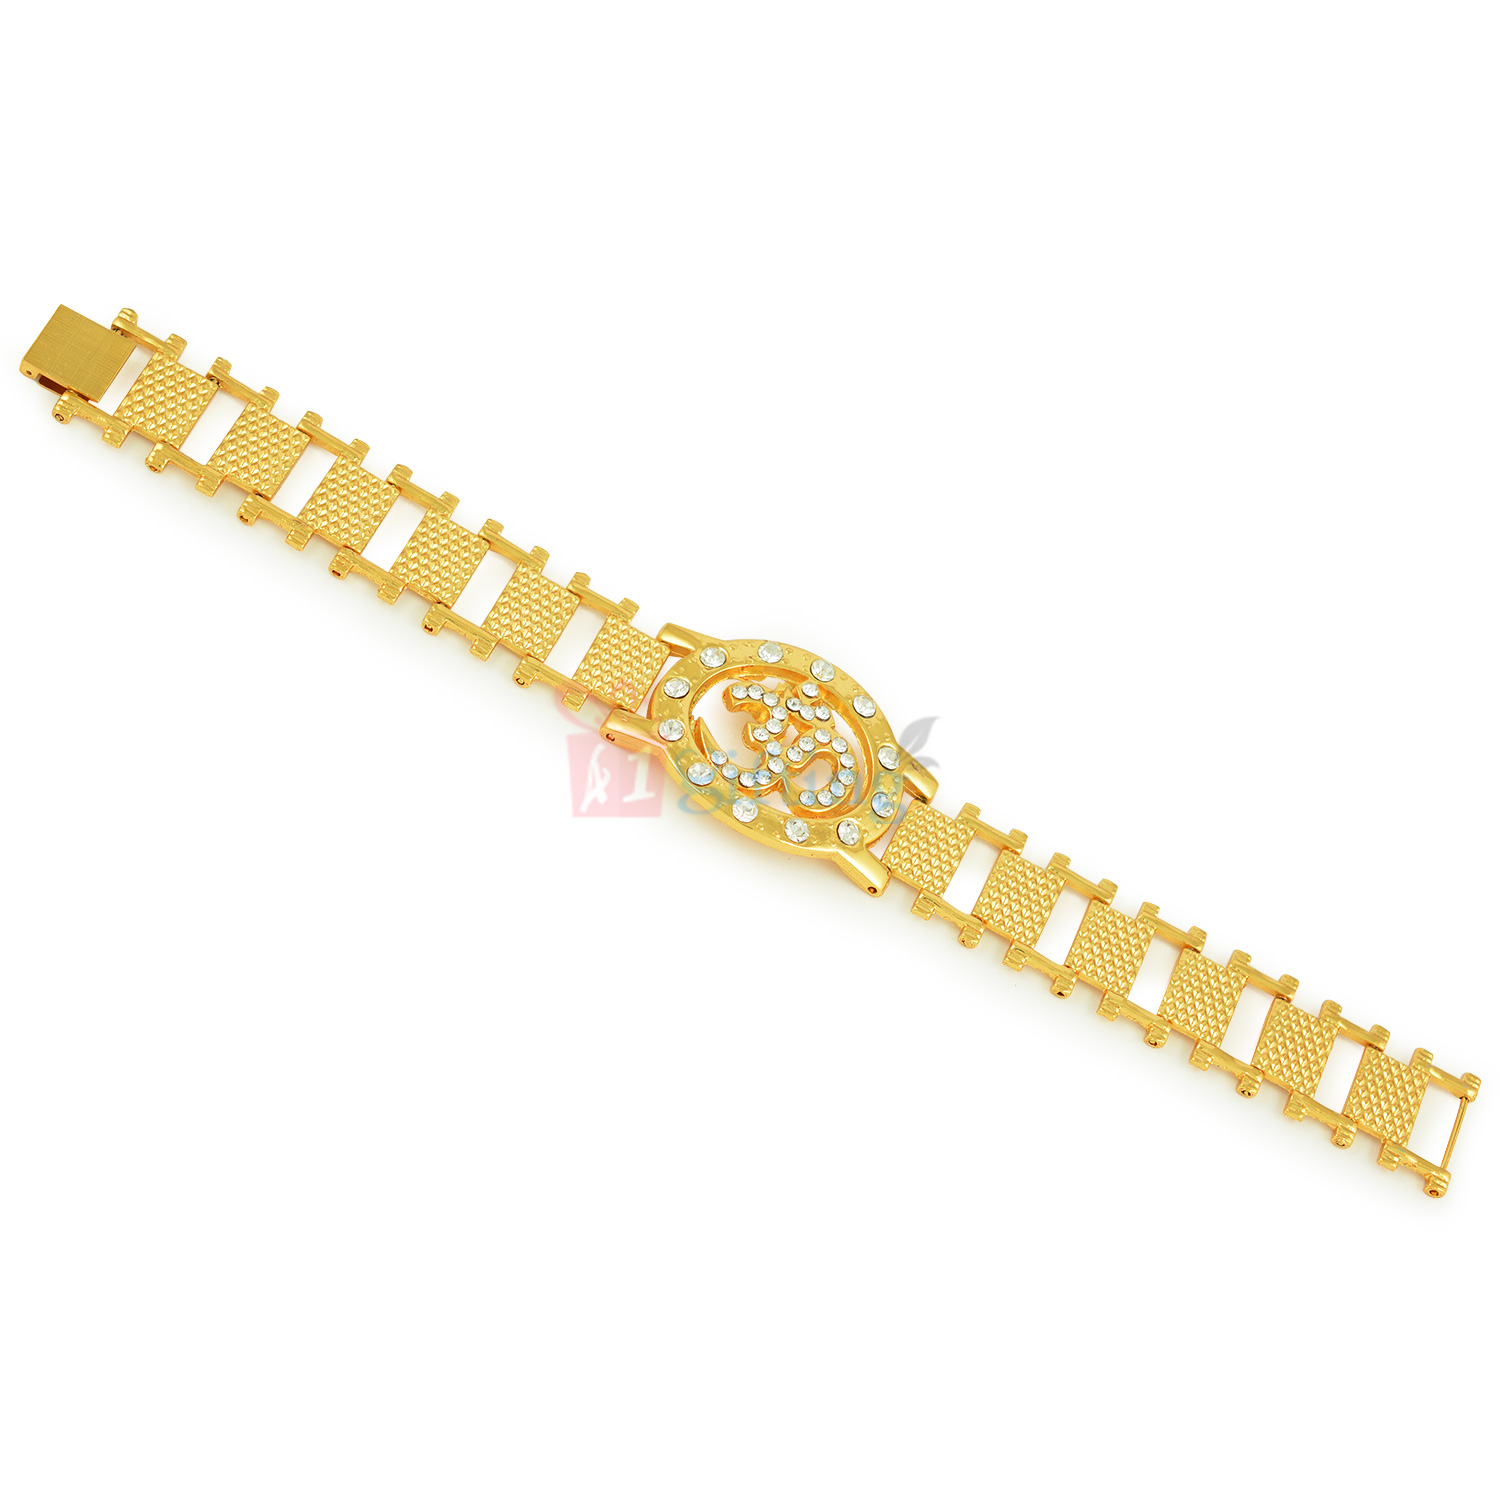 Om Designed Dial Watch Looking Golden Bracelet